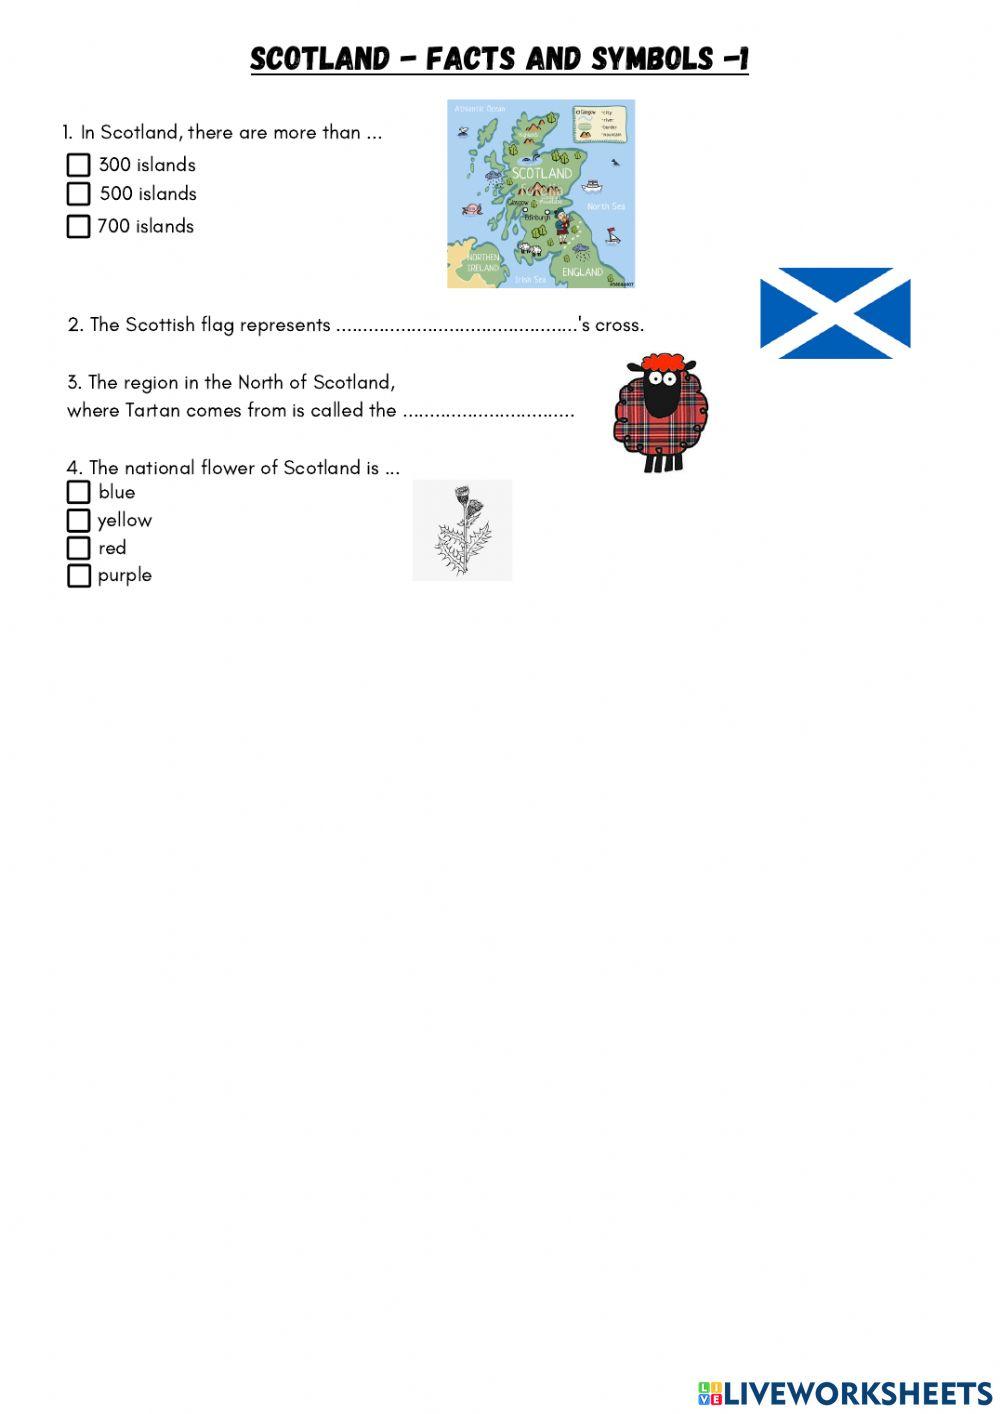 Scotland - Facts and Symbols - 1